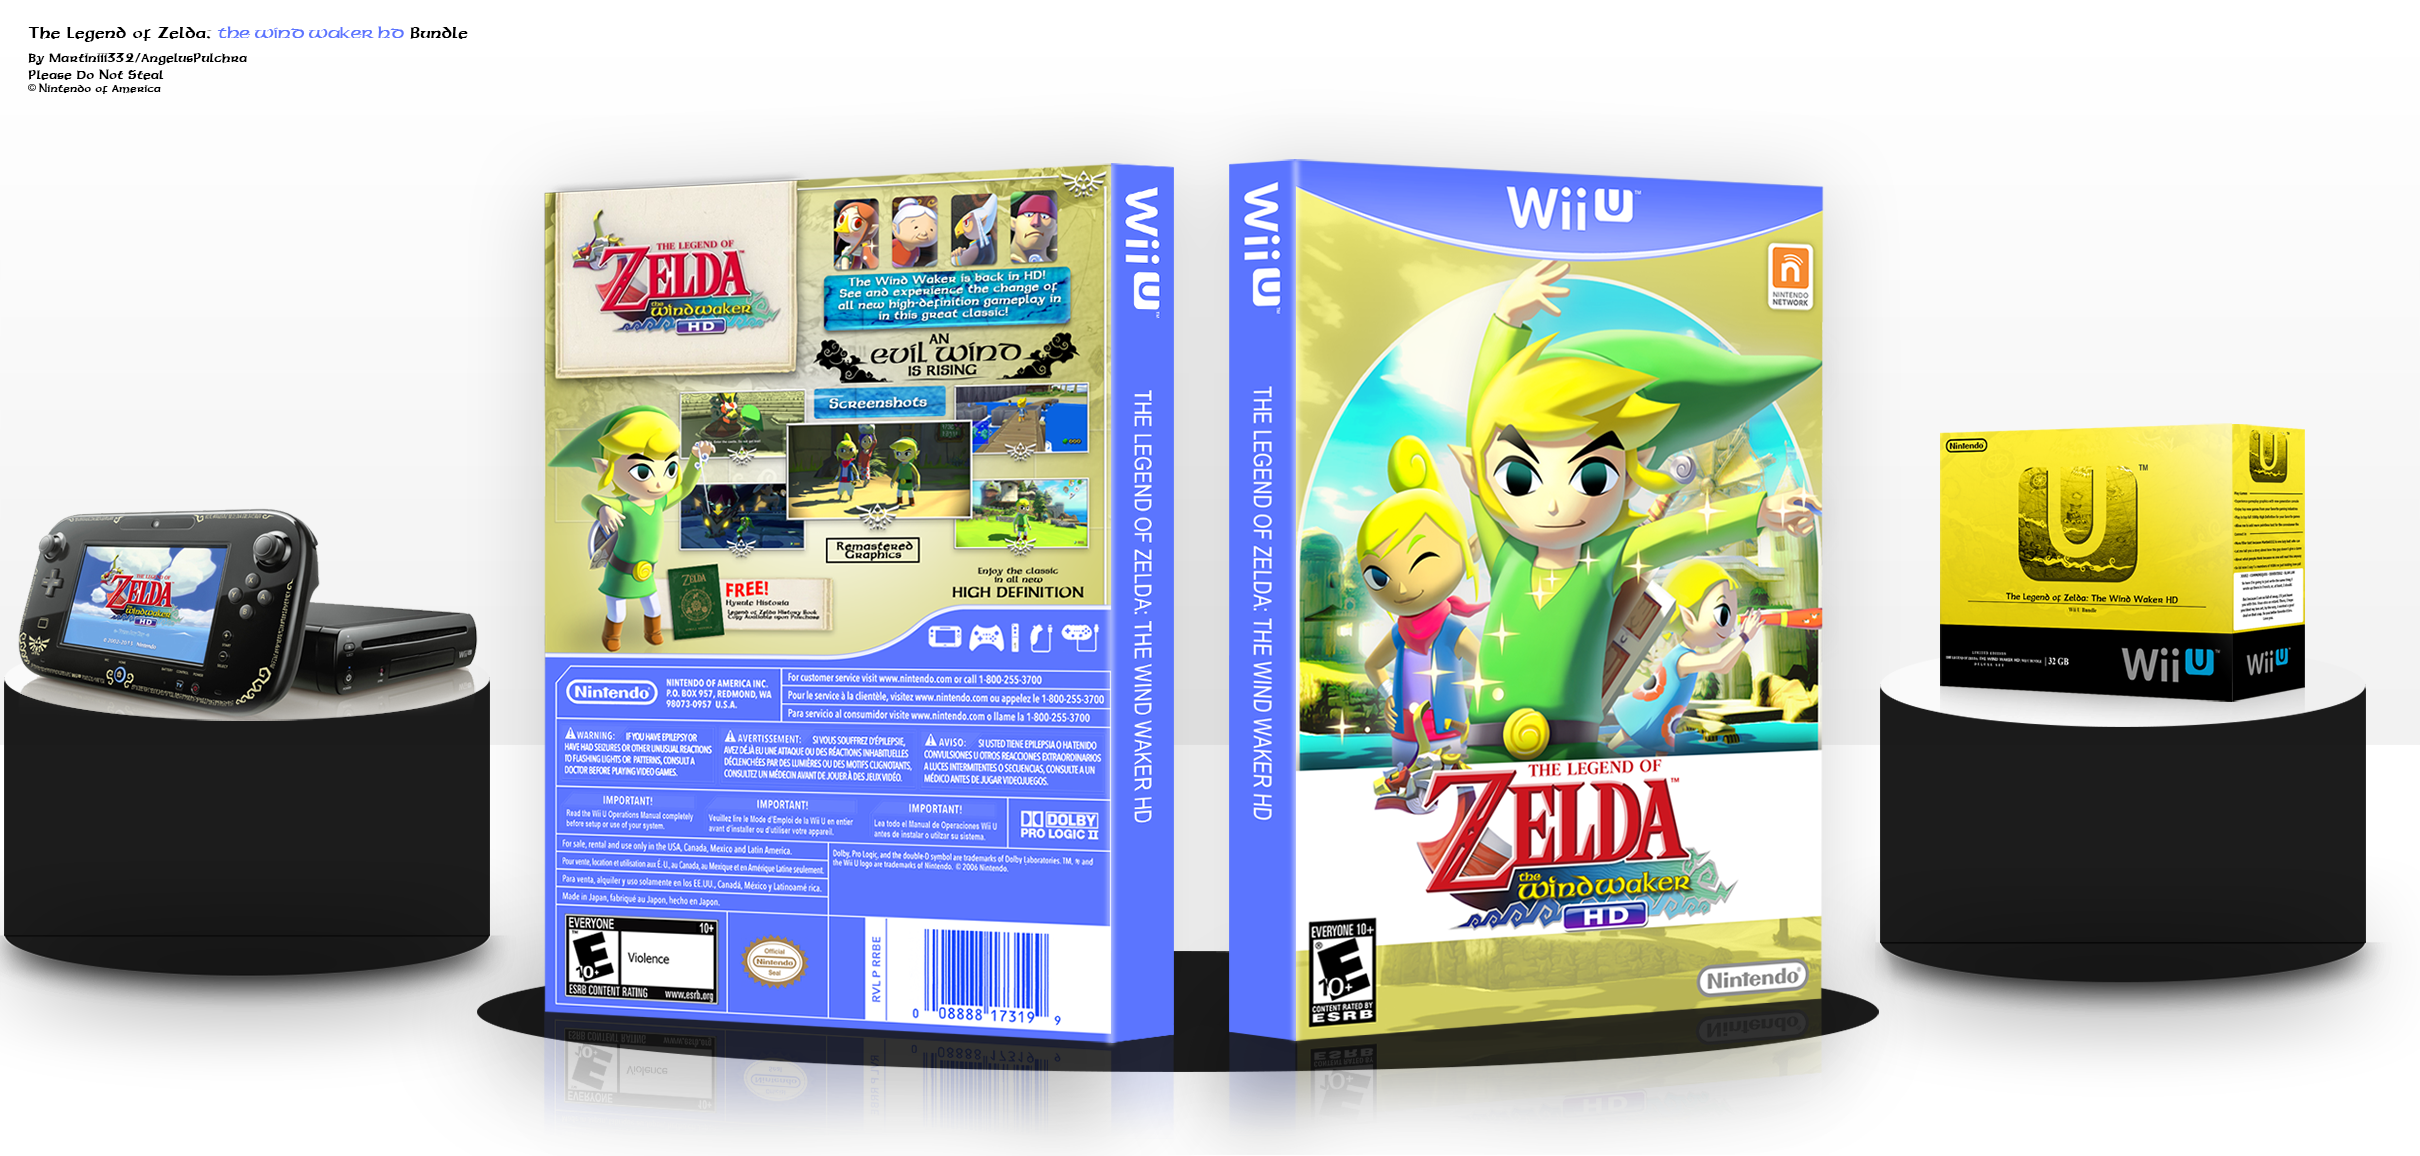 The Legend of Zelda: The Wind Waker HD Bundle box cover